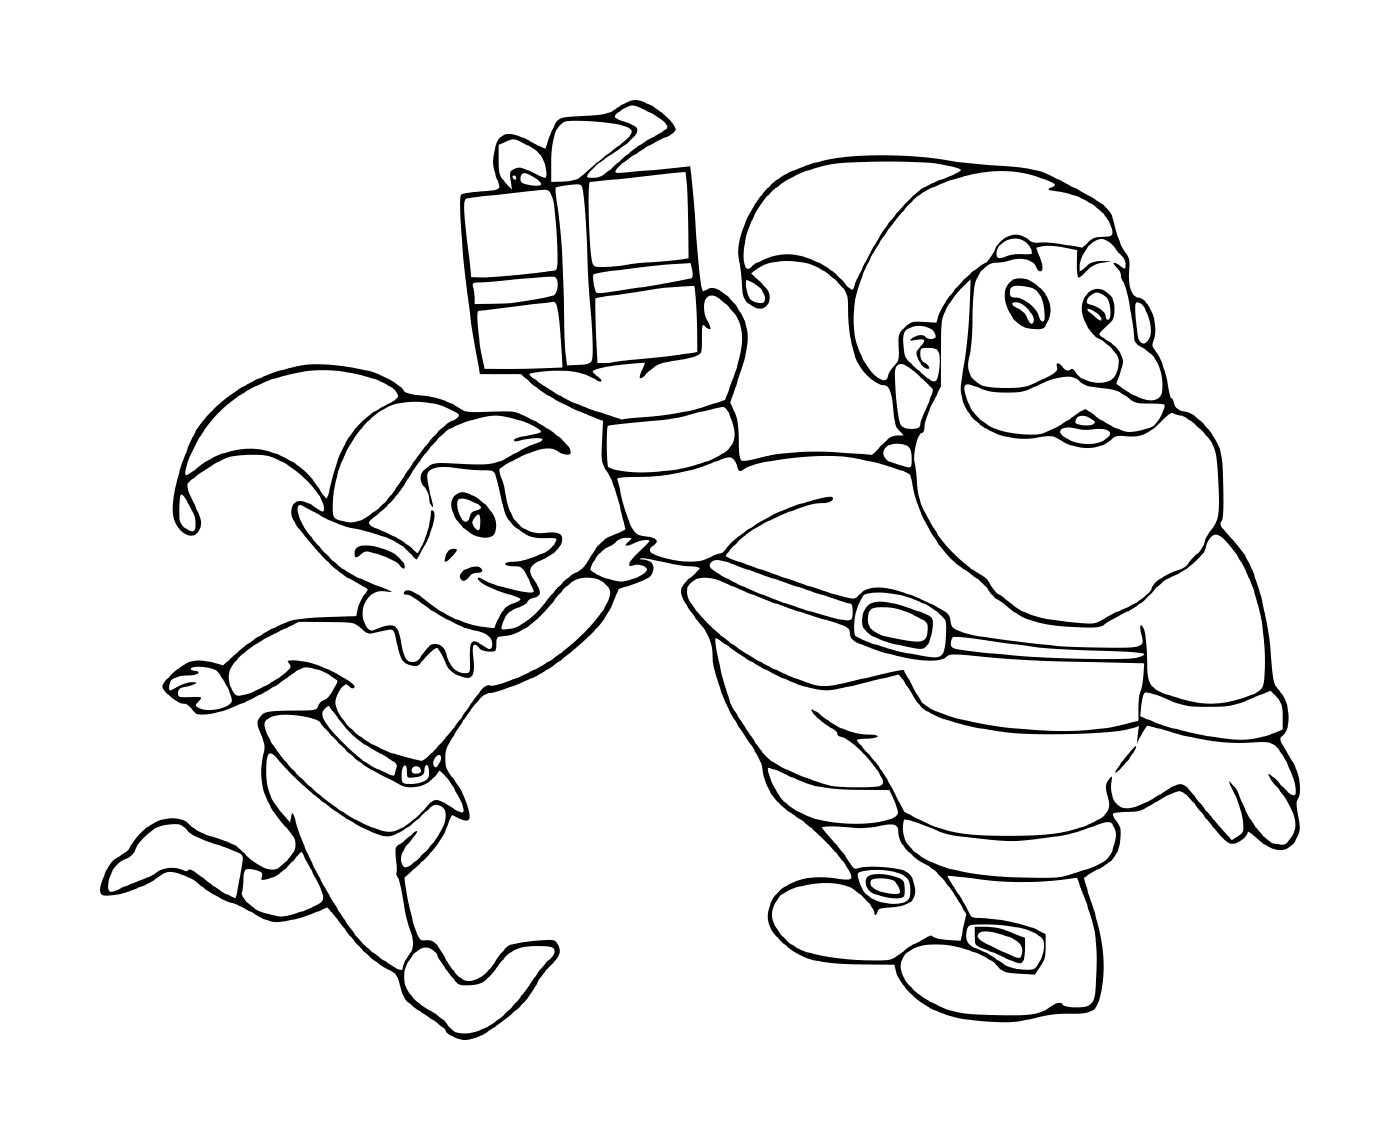  Elfe and Santa having a gift 